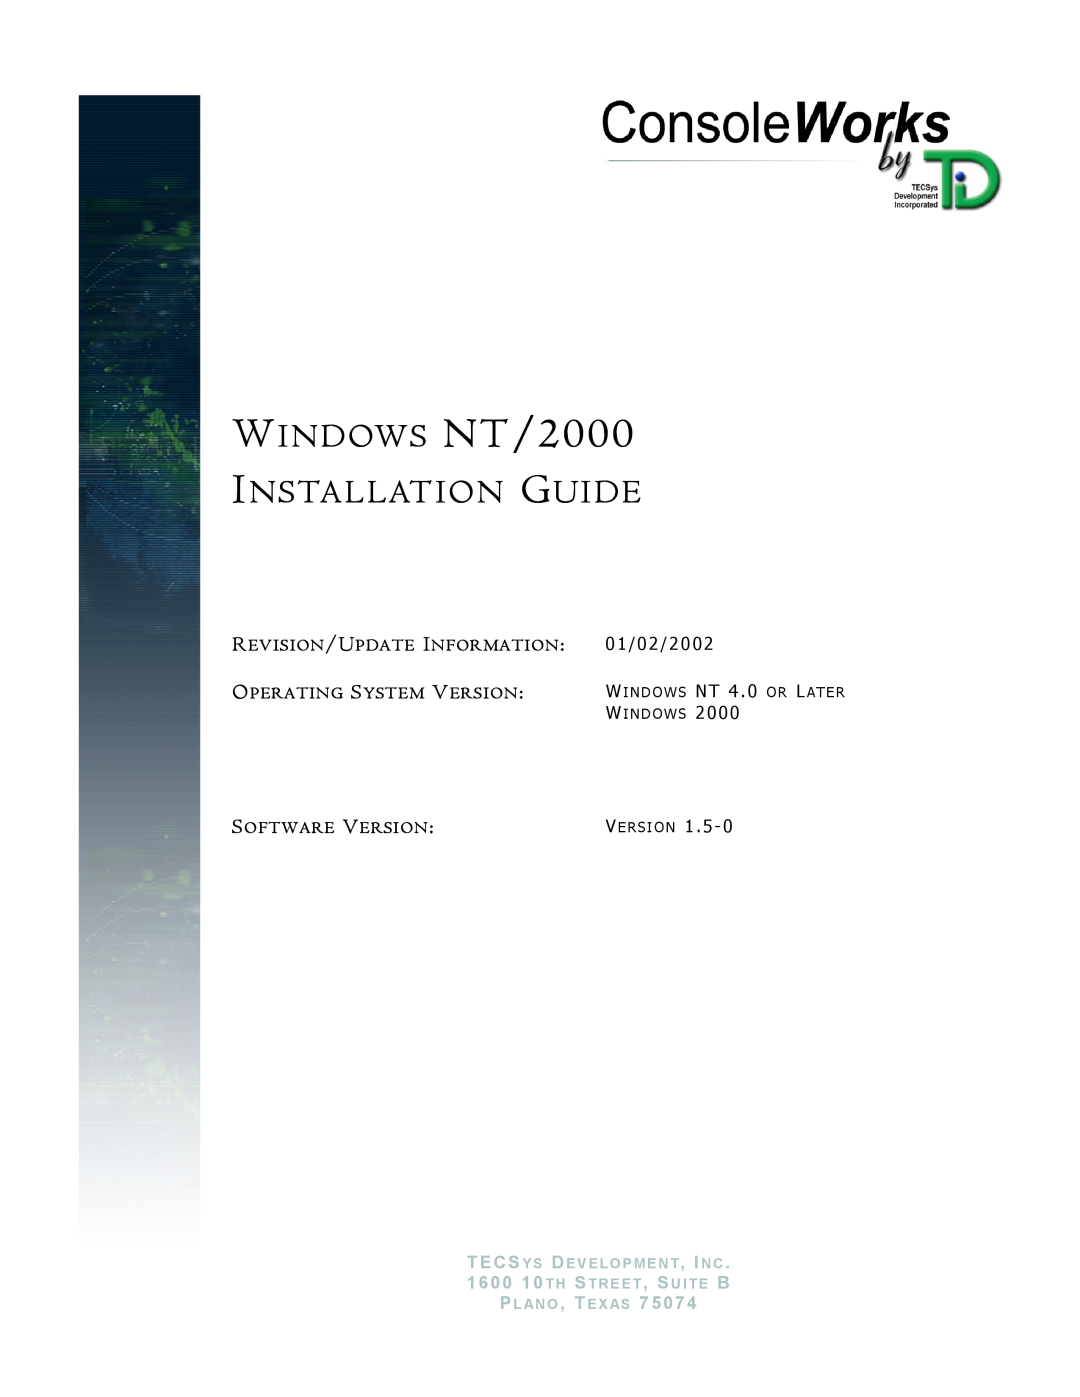 York Version 1.5.0 manual WINDOWS NT/2000, Installation Guide, Revision/Update Information, 01/02/2002, Software Version 